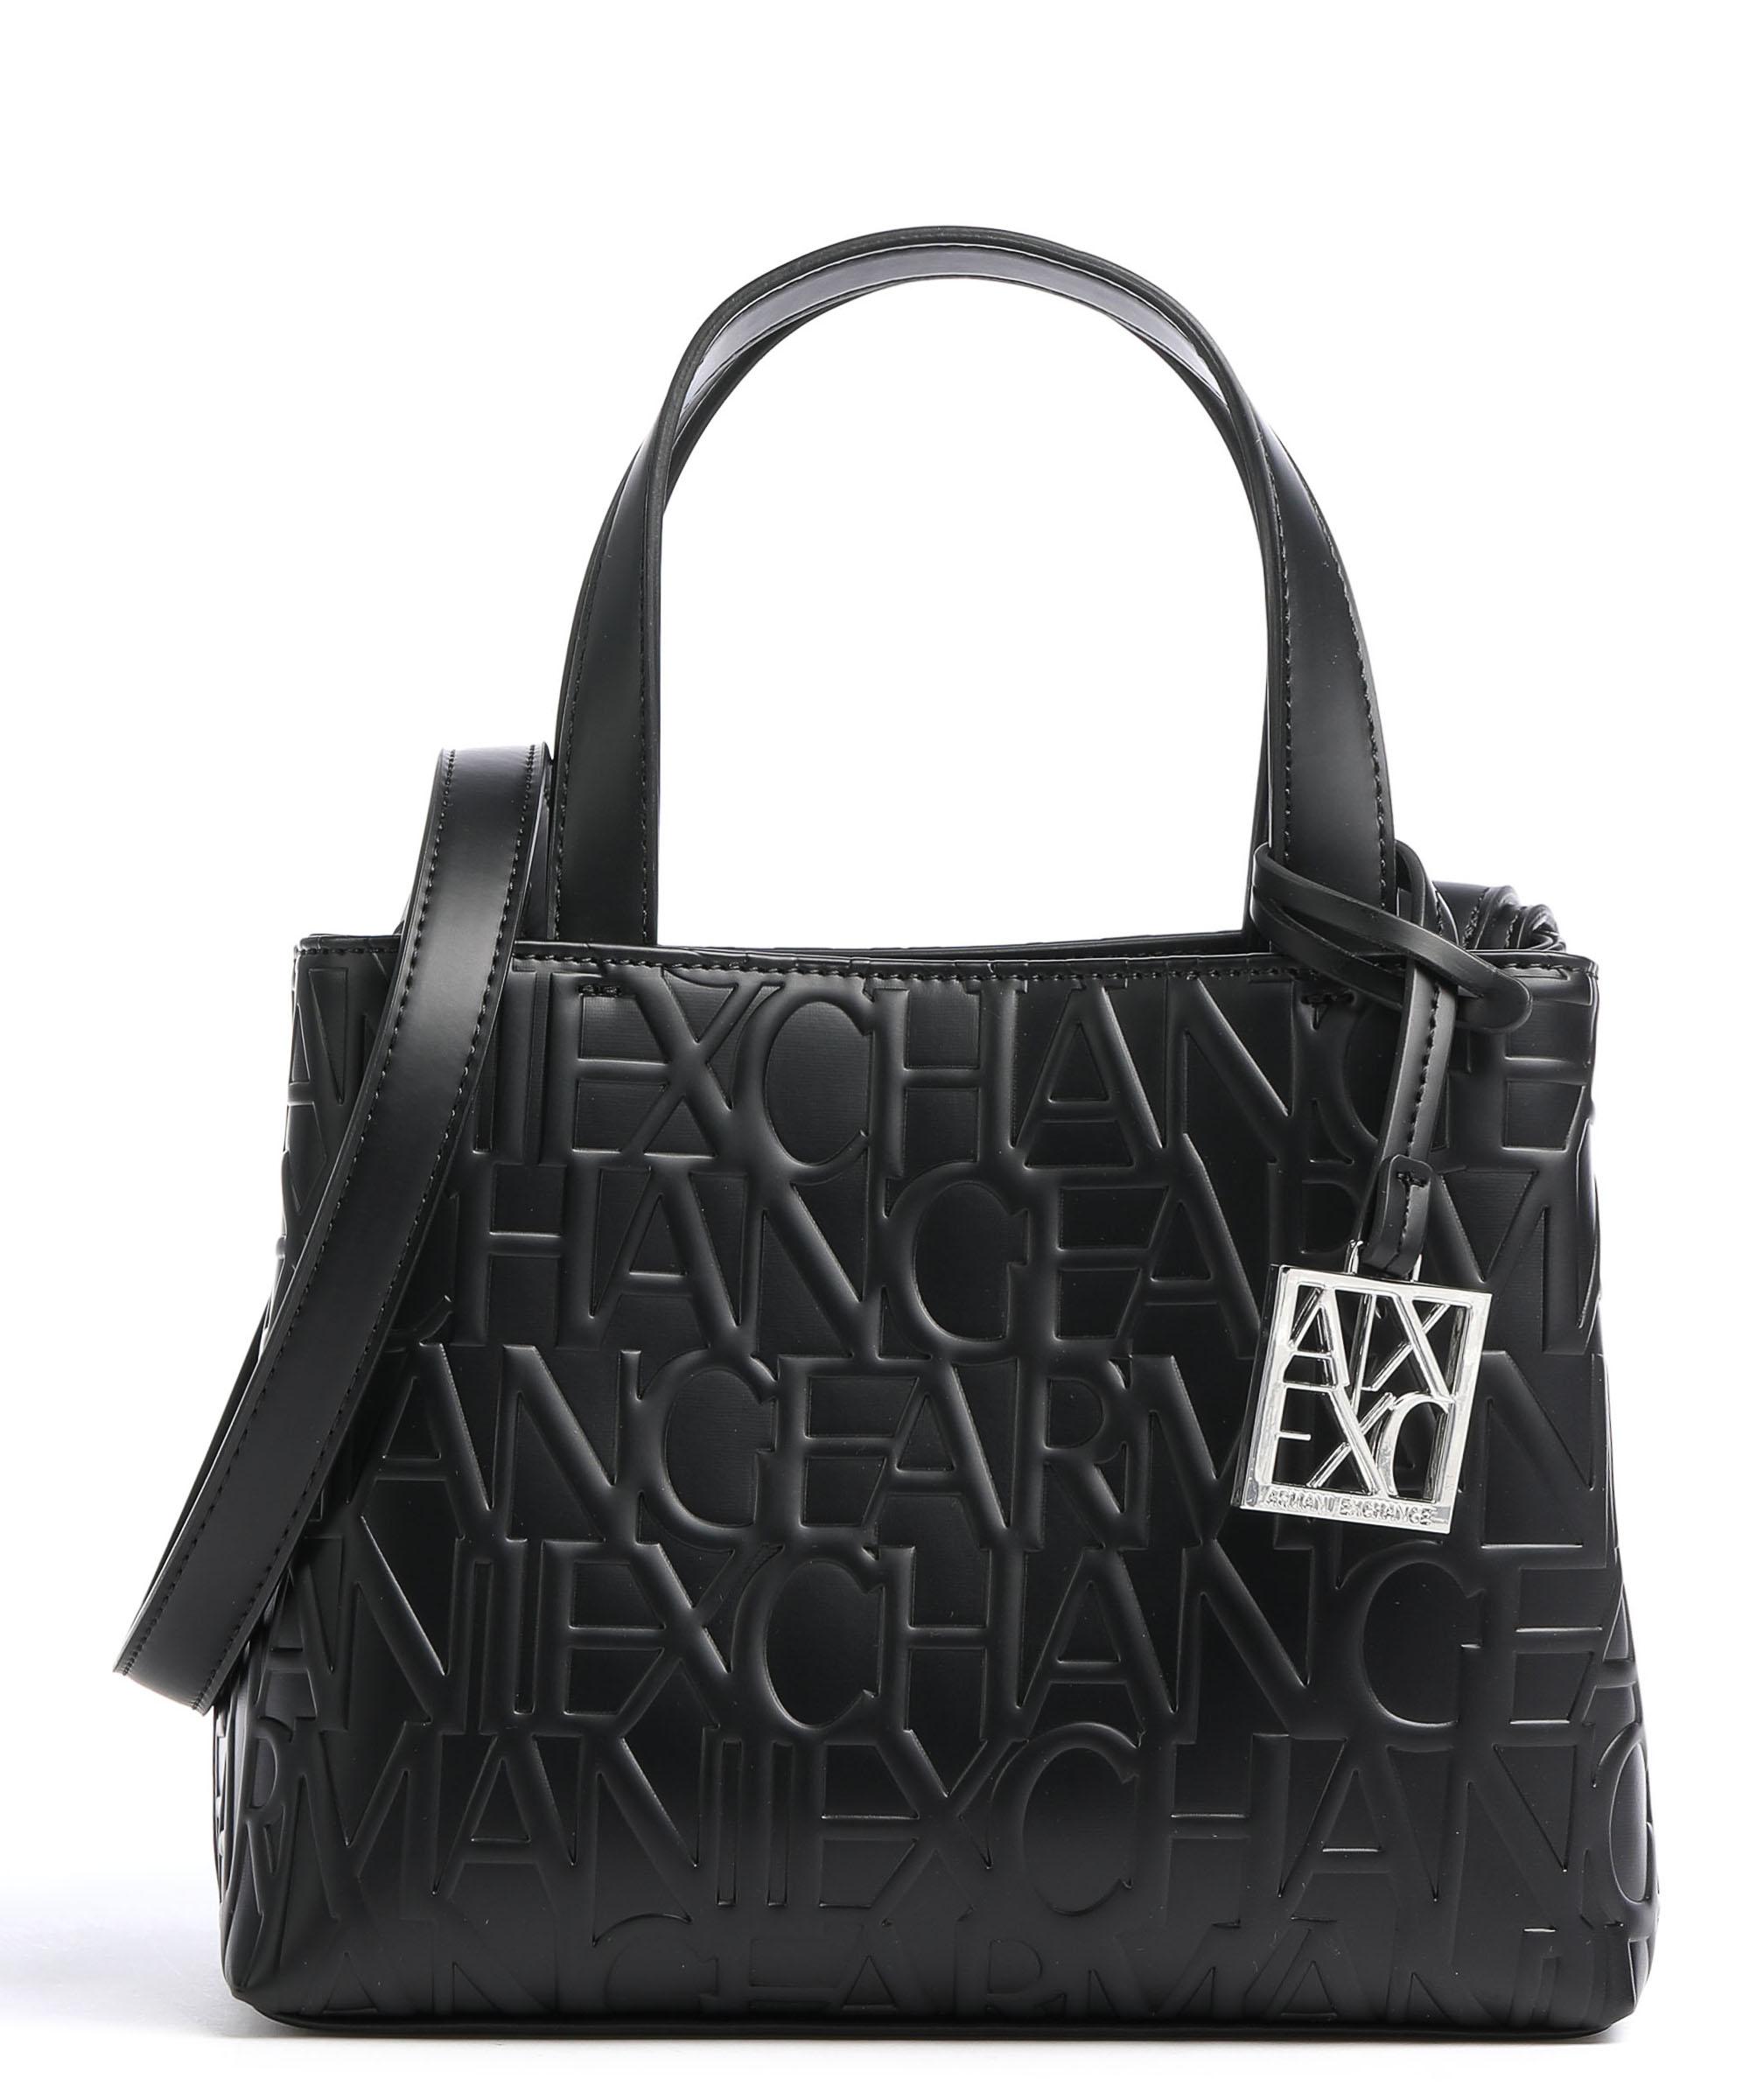 Armani Exchange Bags Styles, Prices - Trendyol